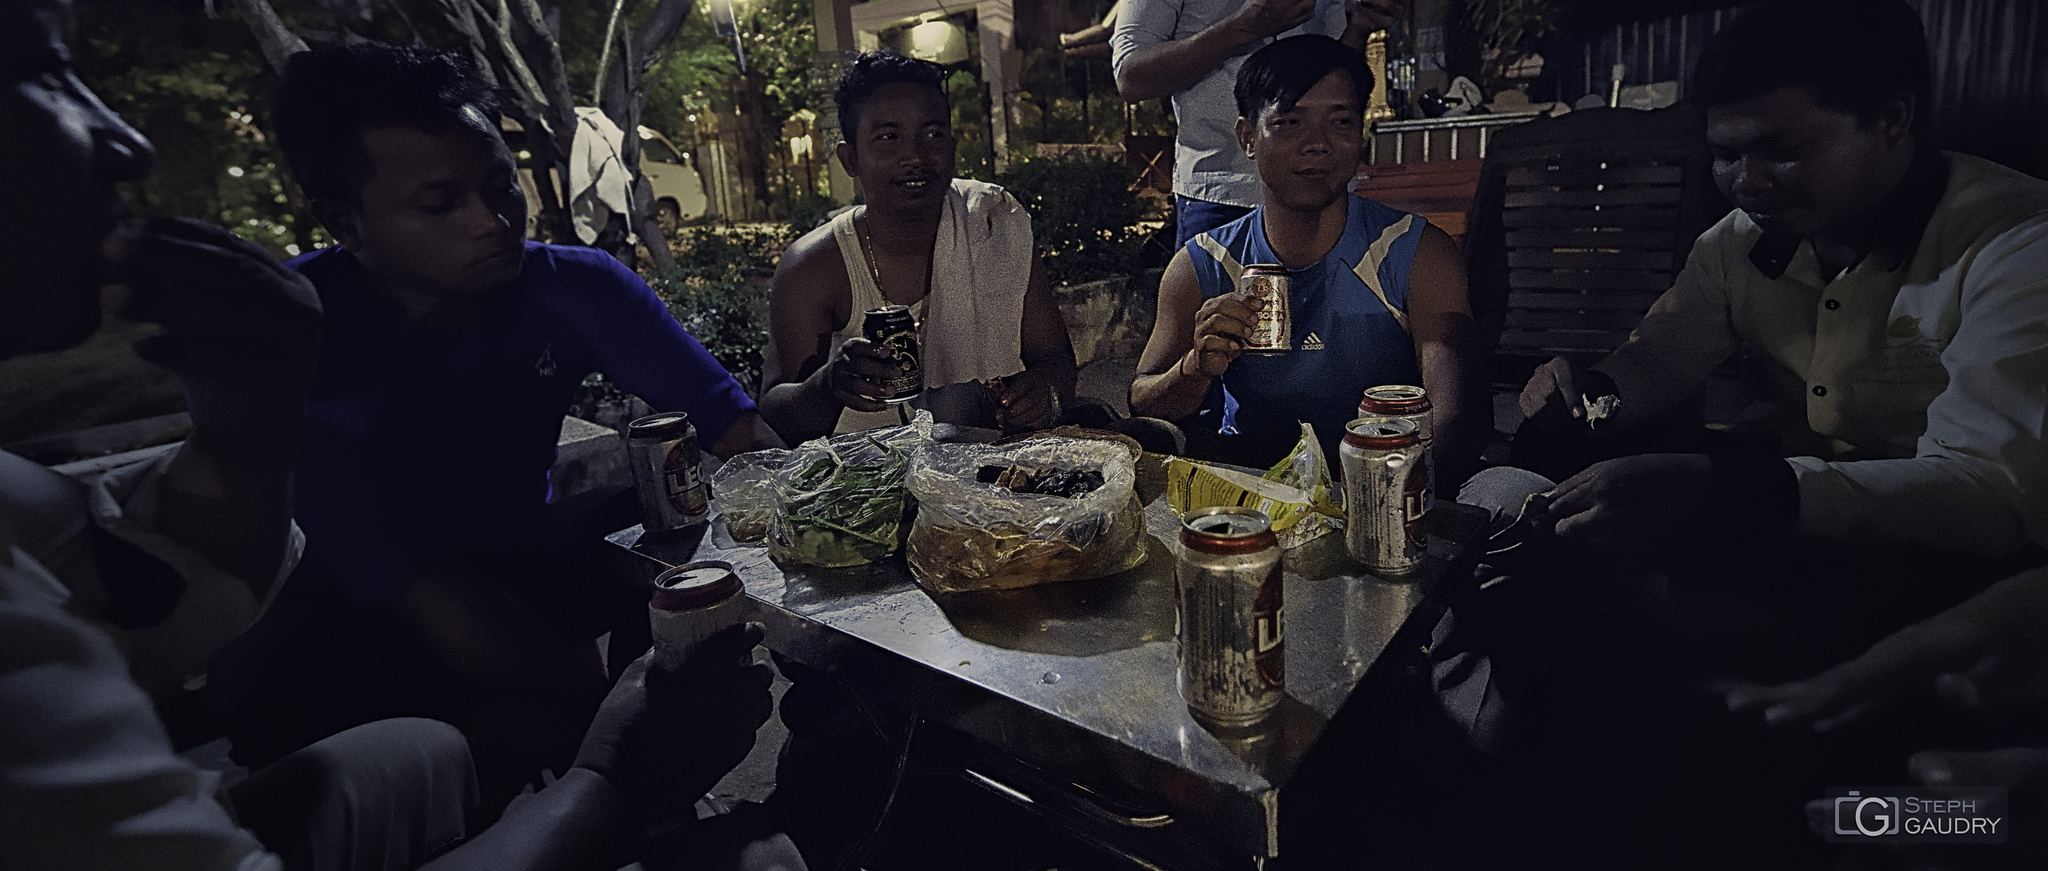 Cambodge / Partage du repas du soir...